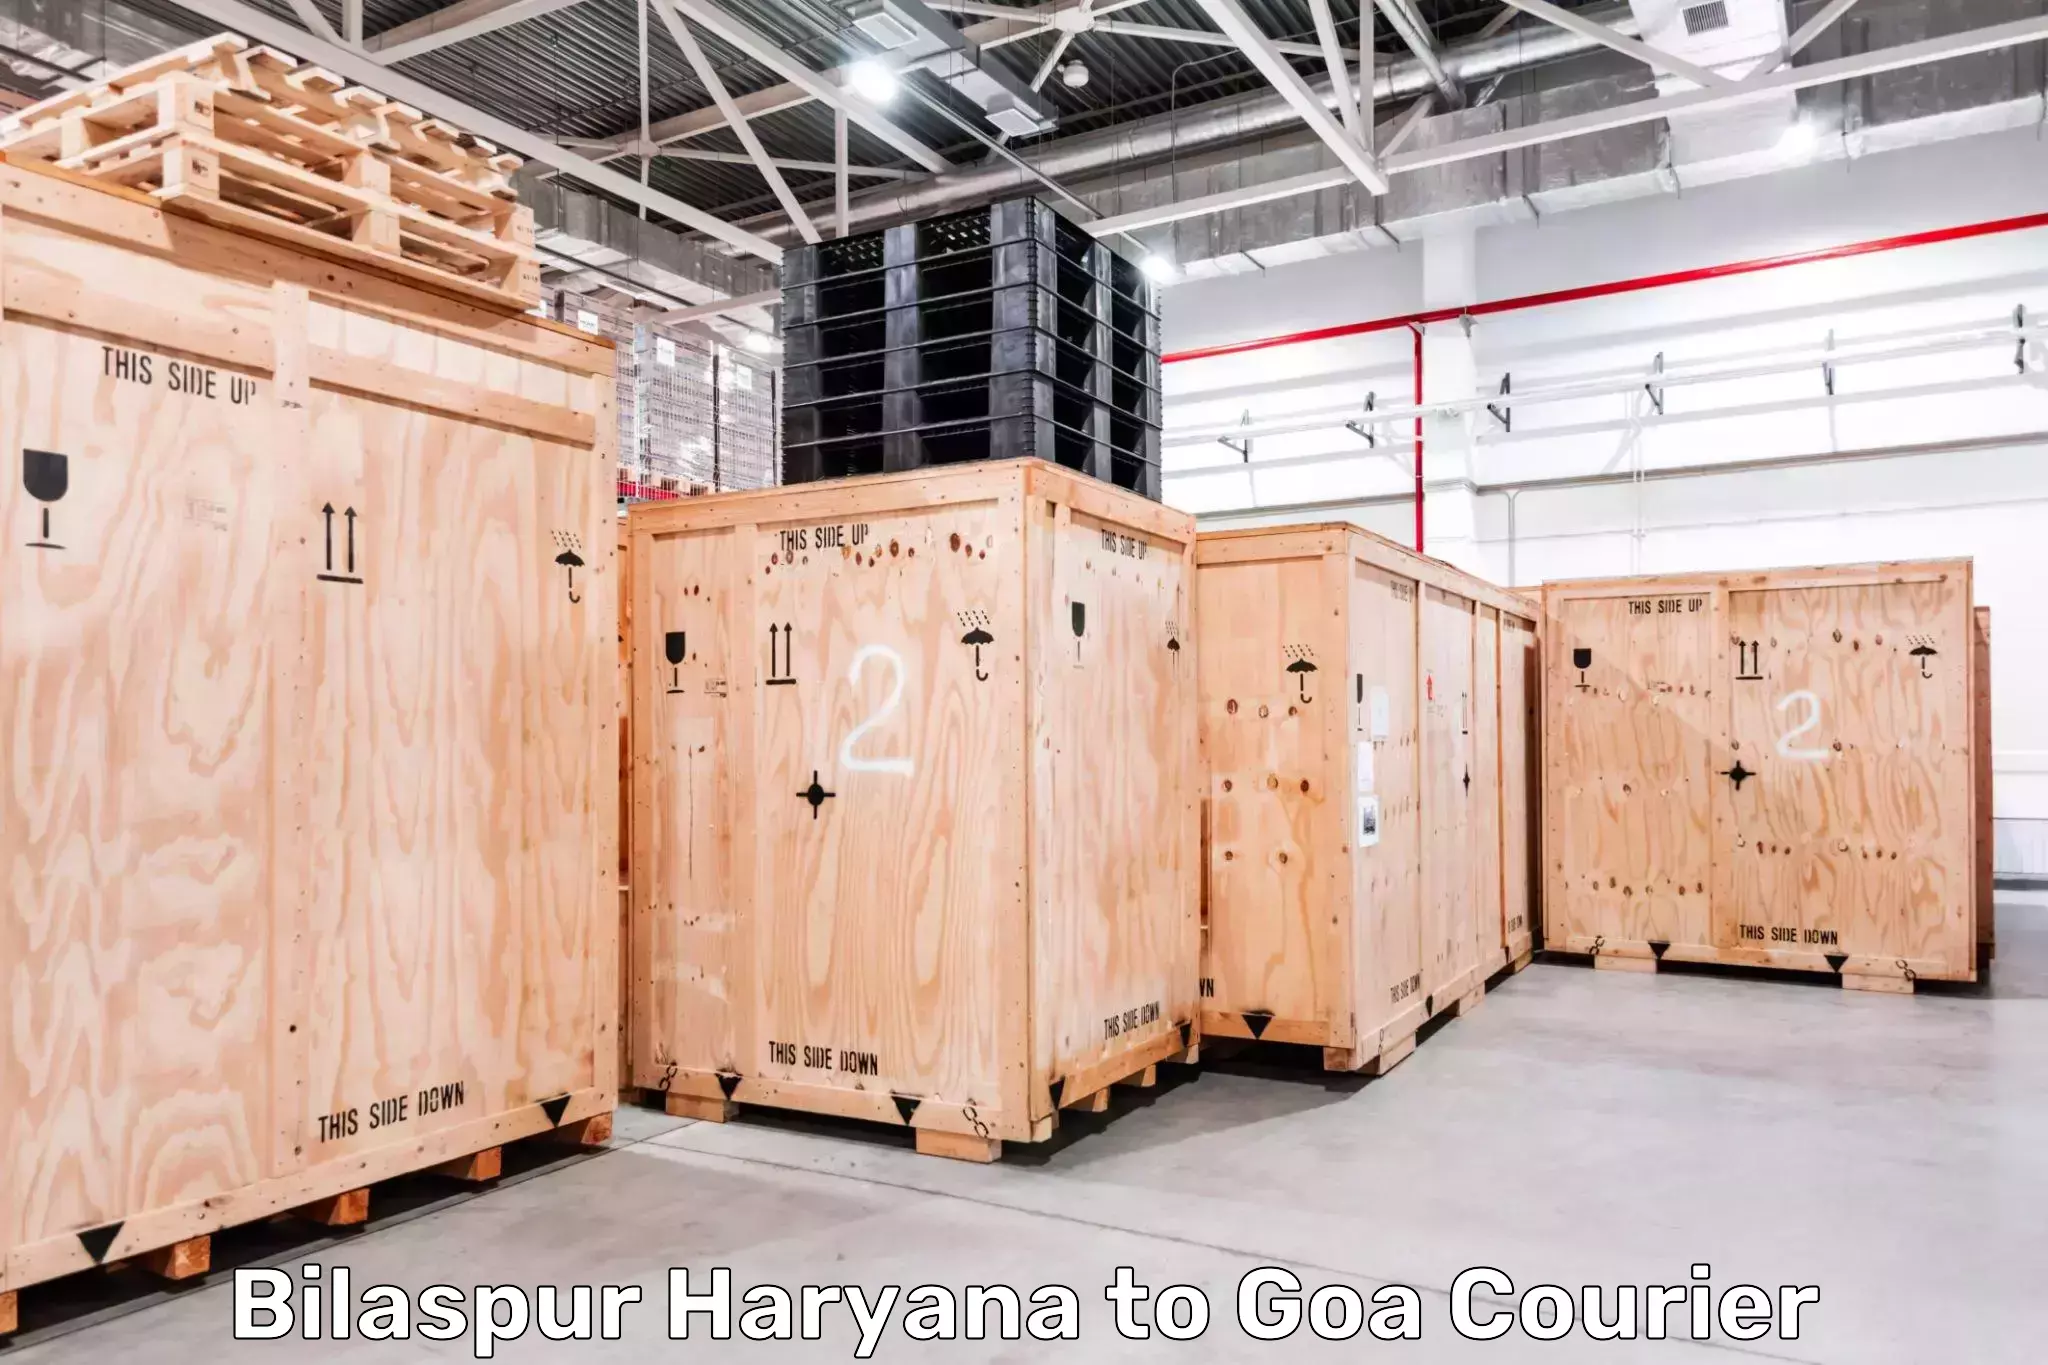 Delivery service partnership Bilaspur Haryana to Goa